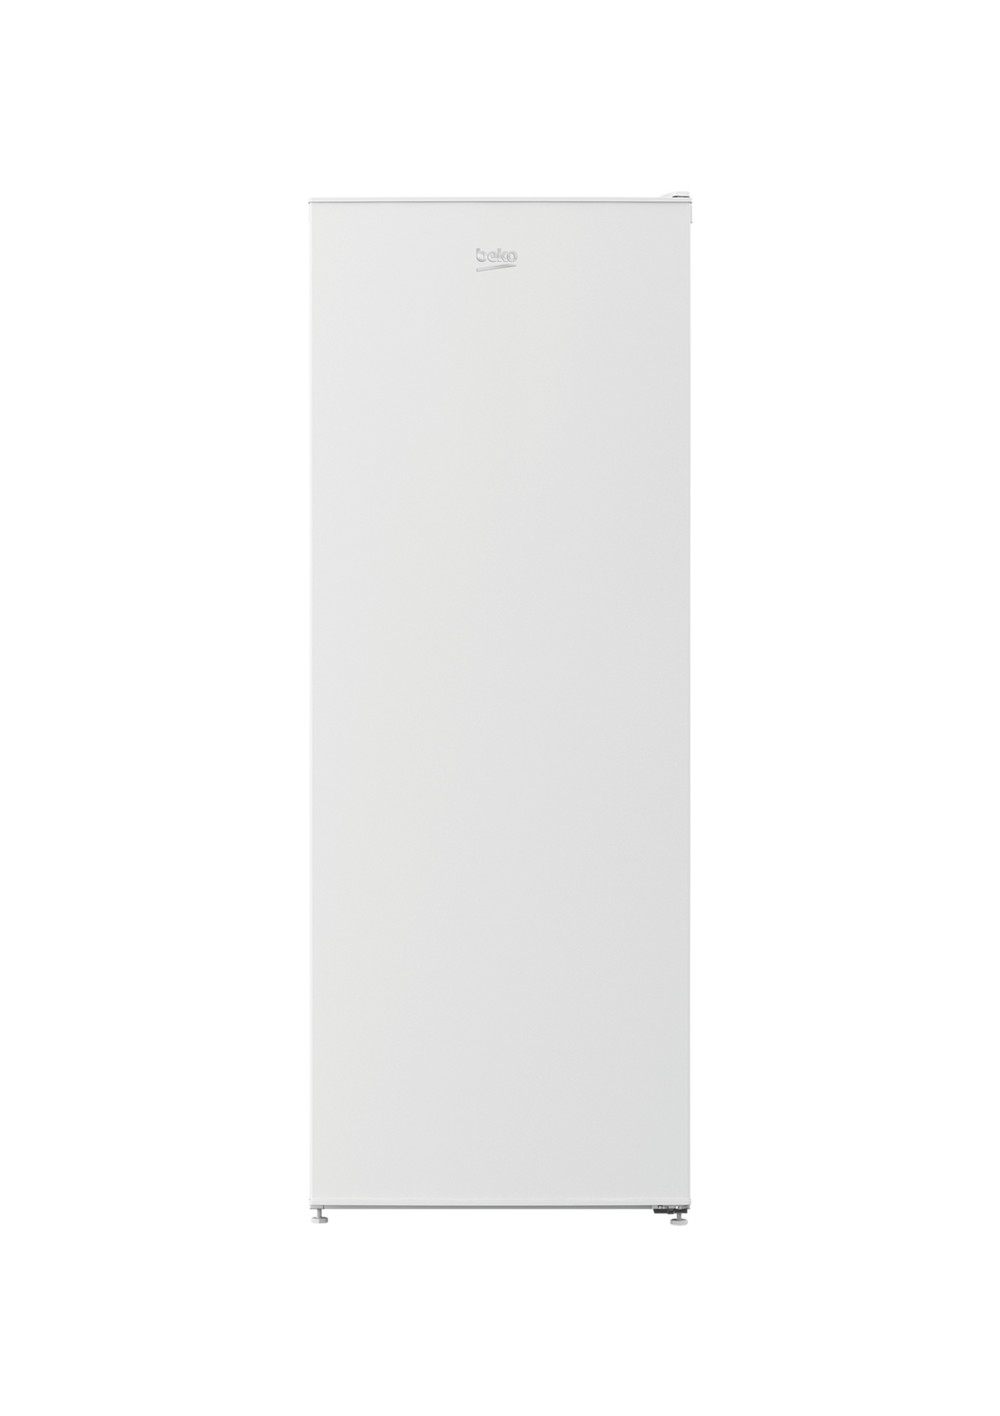 Beko LCSM3545W Freestanding Tall Larder Fridge-White